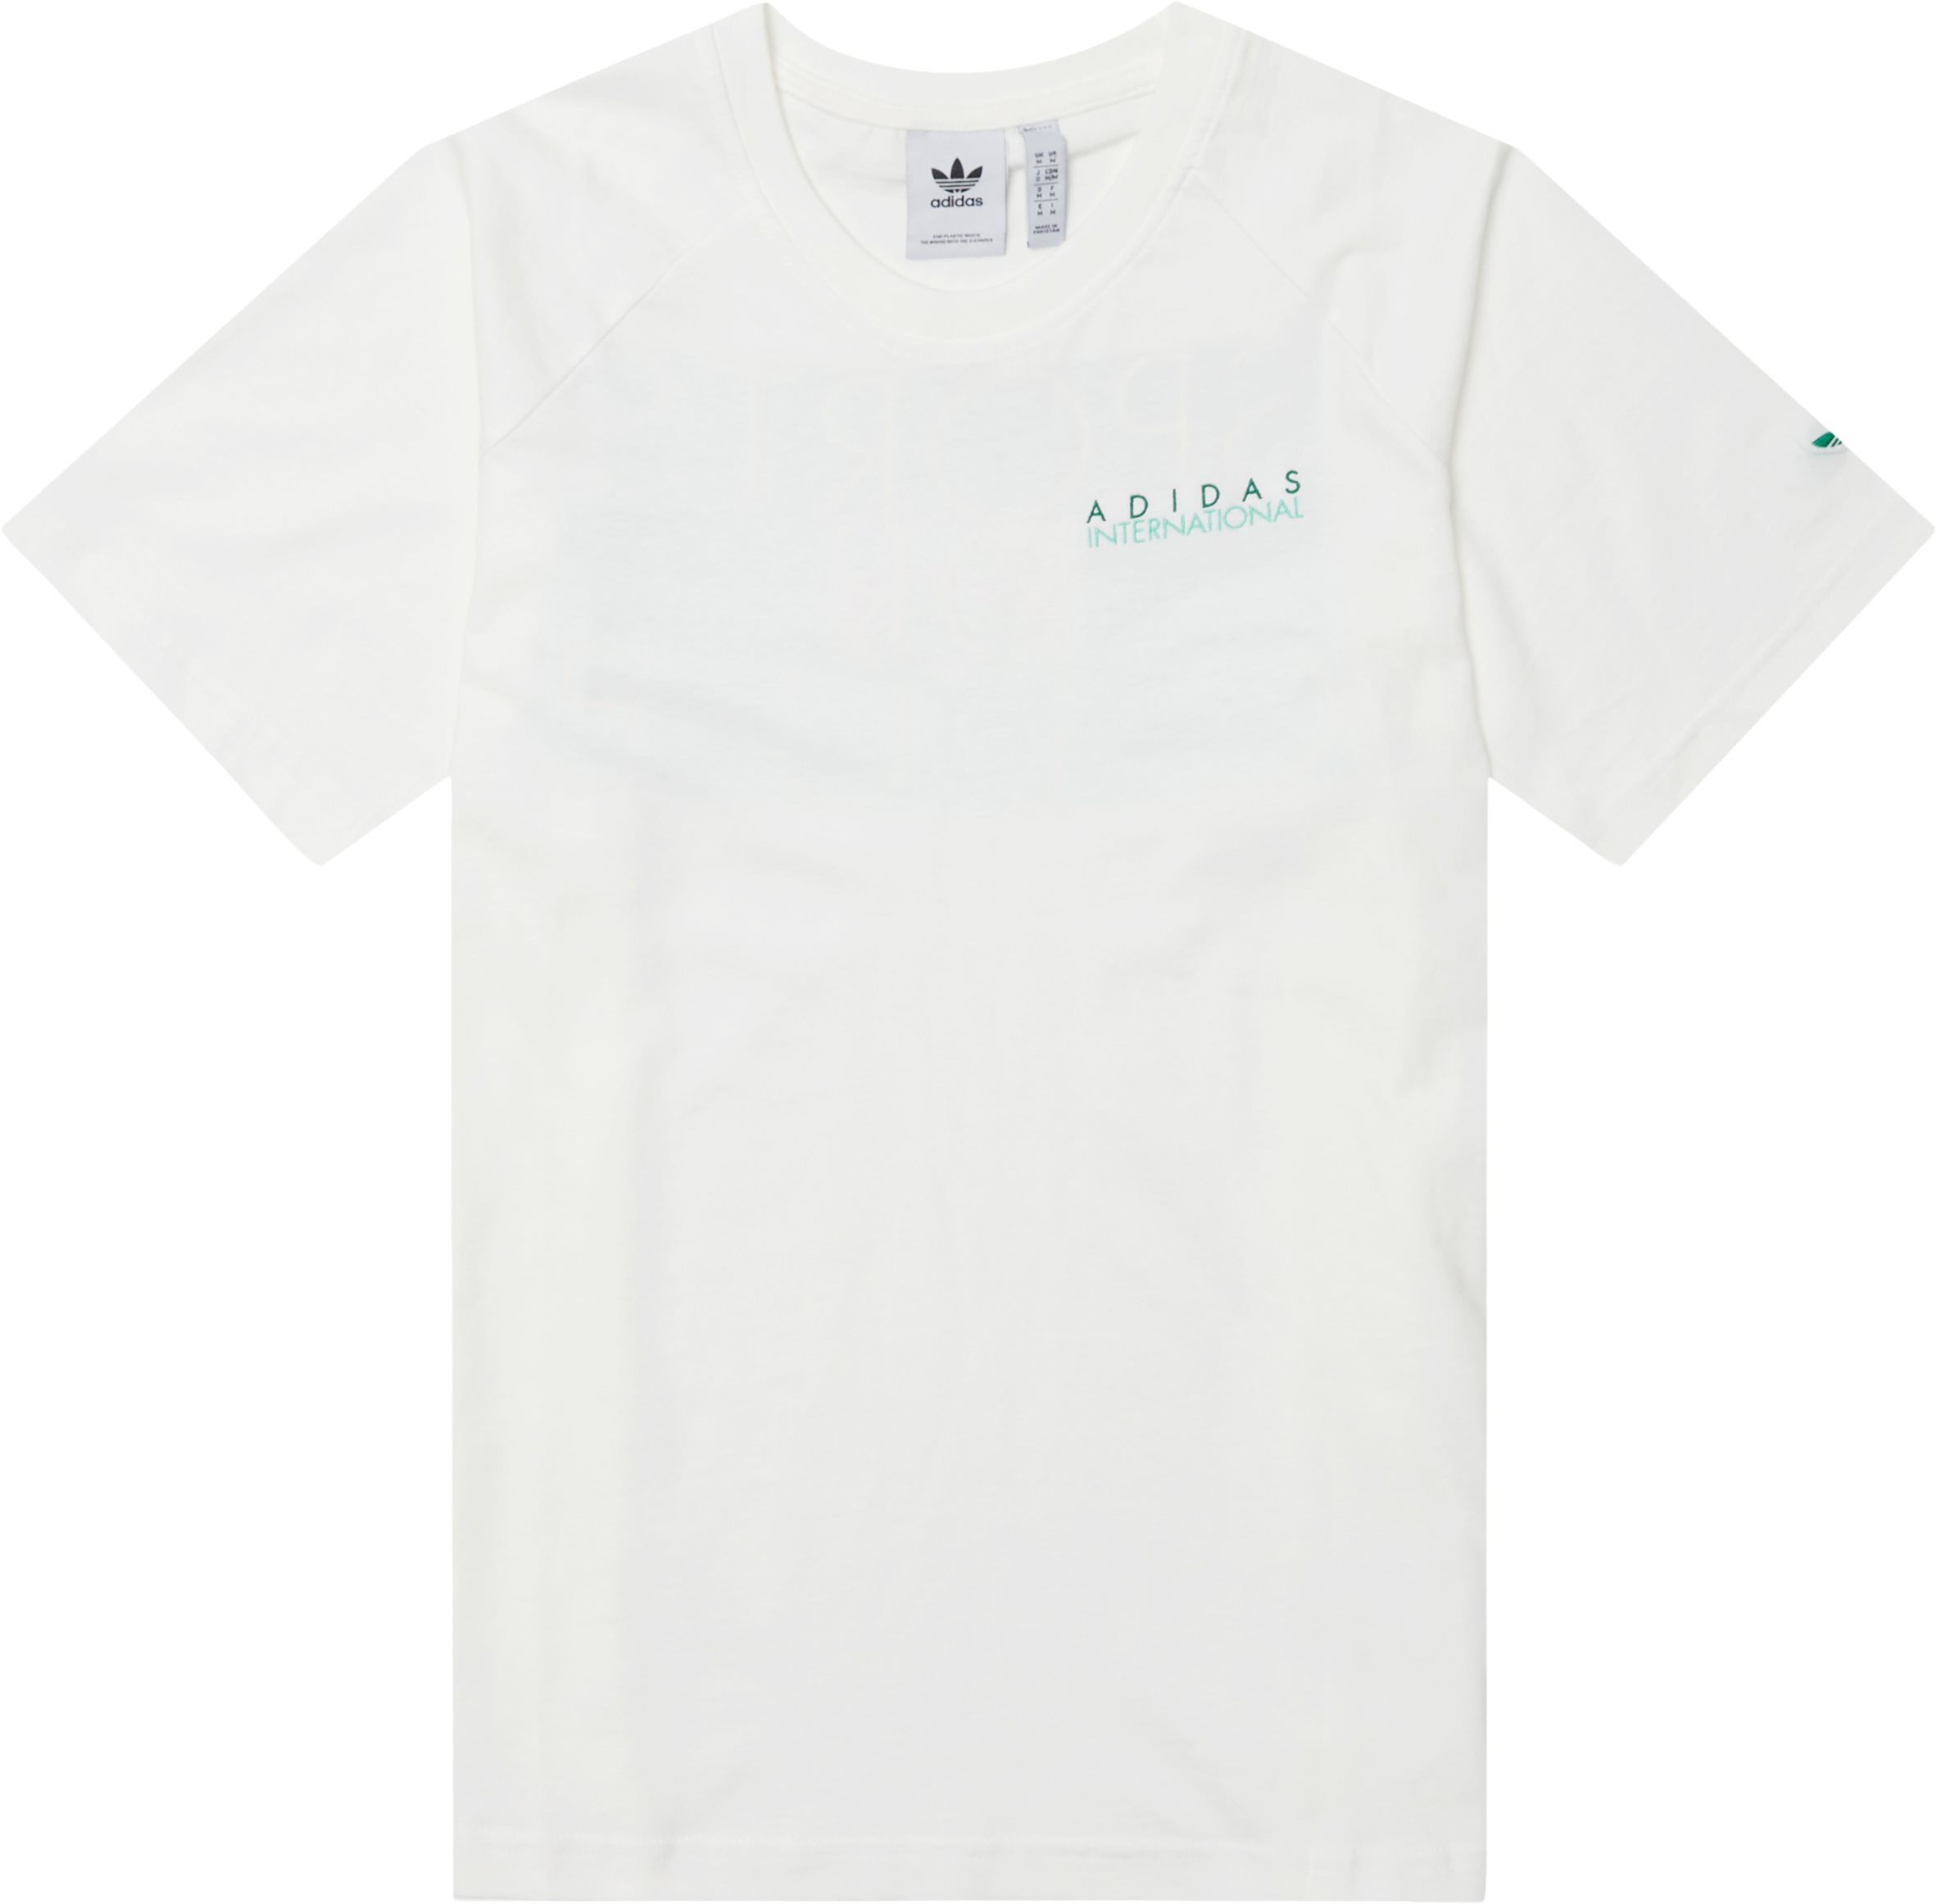 Sports Club Tee - T-shirts - Regular fit - White